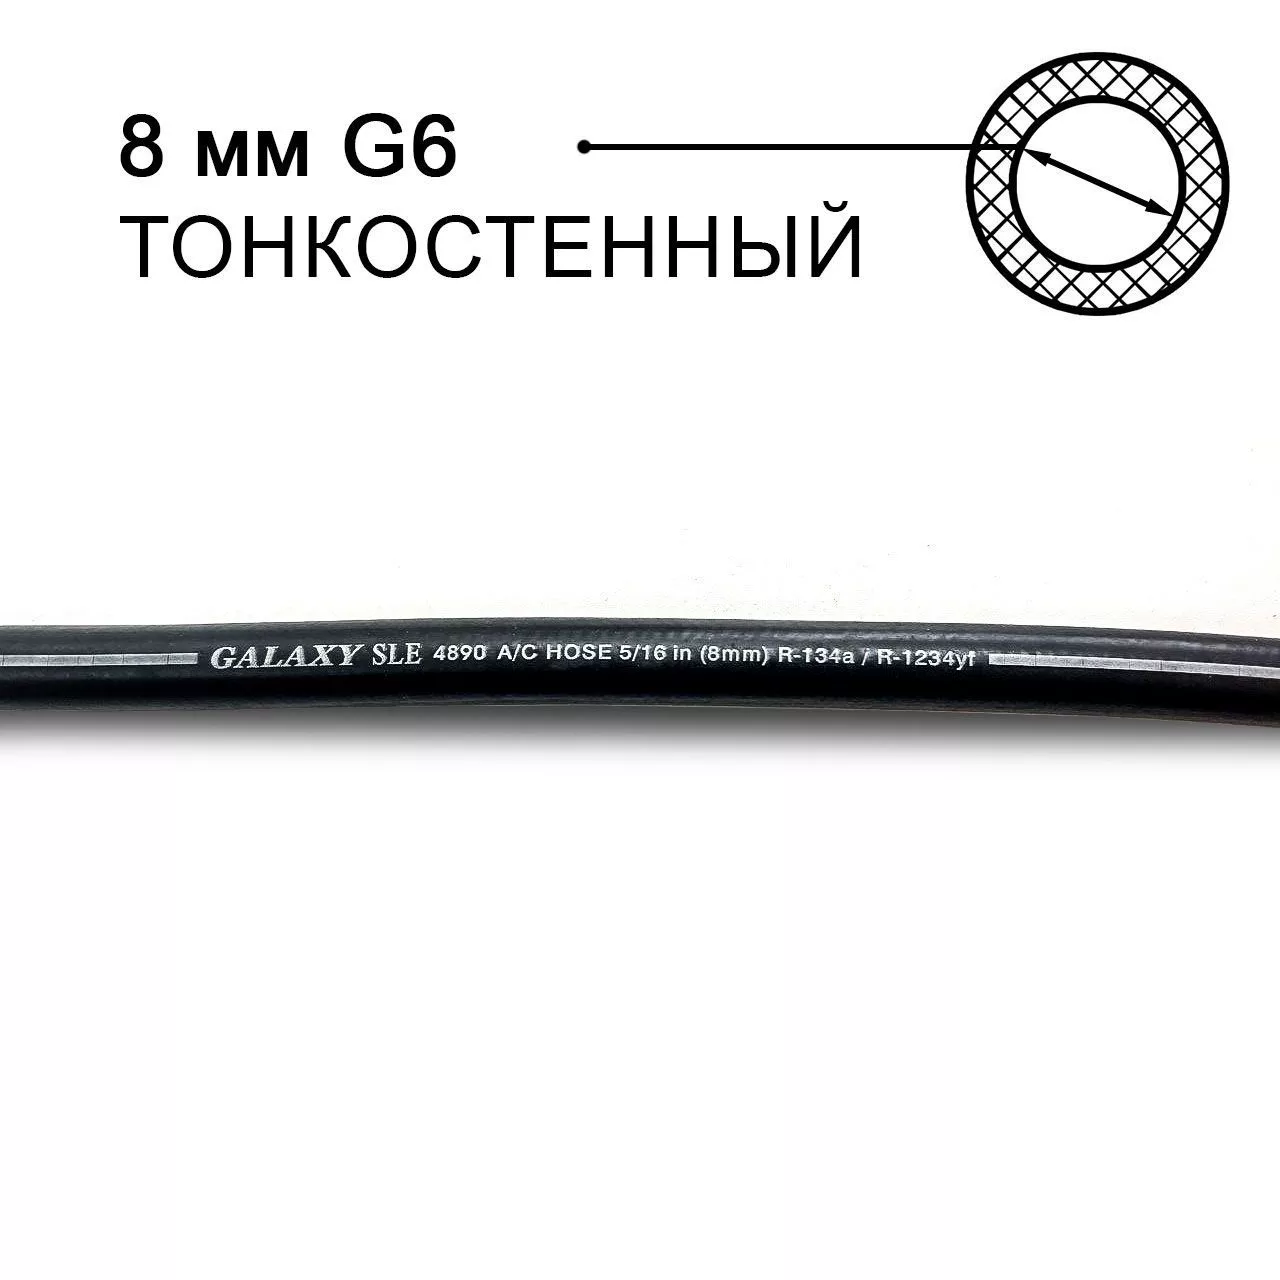 Шланг Galaxy 8 мм (G6) 5/16 4890